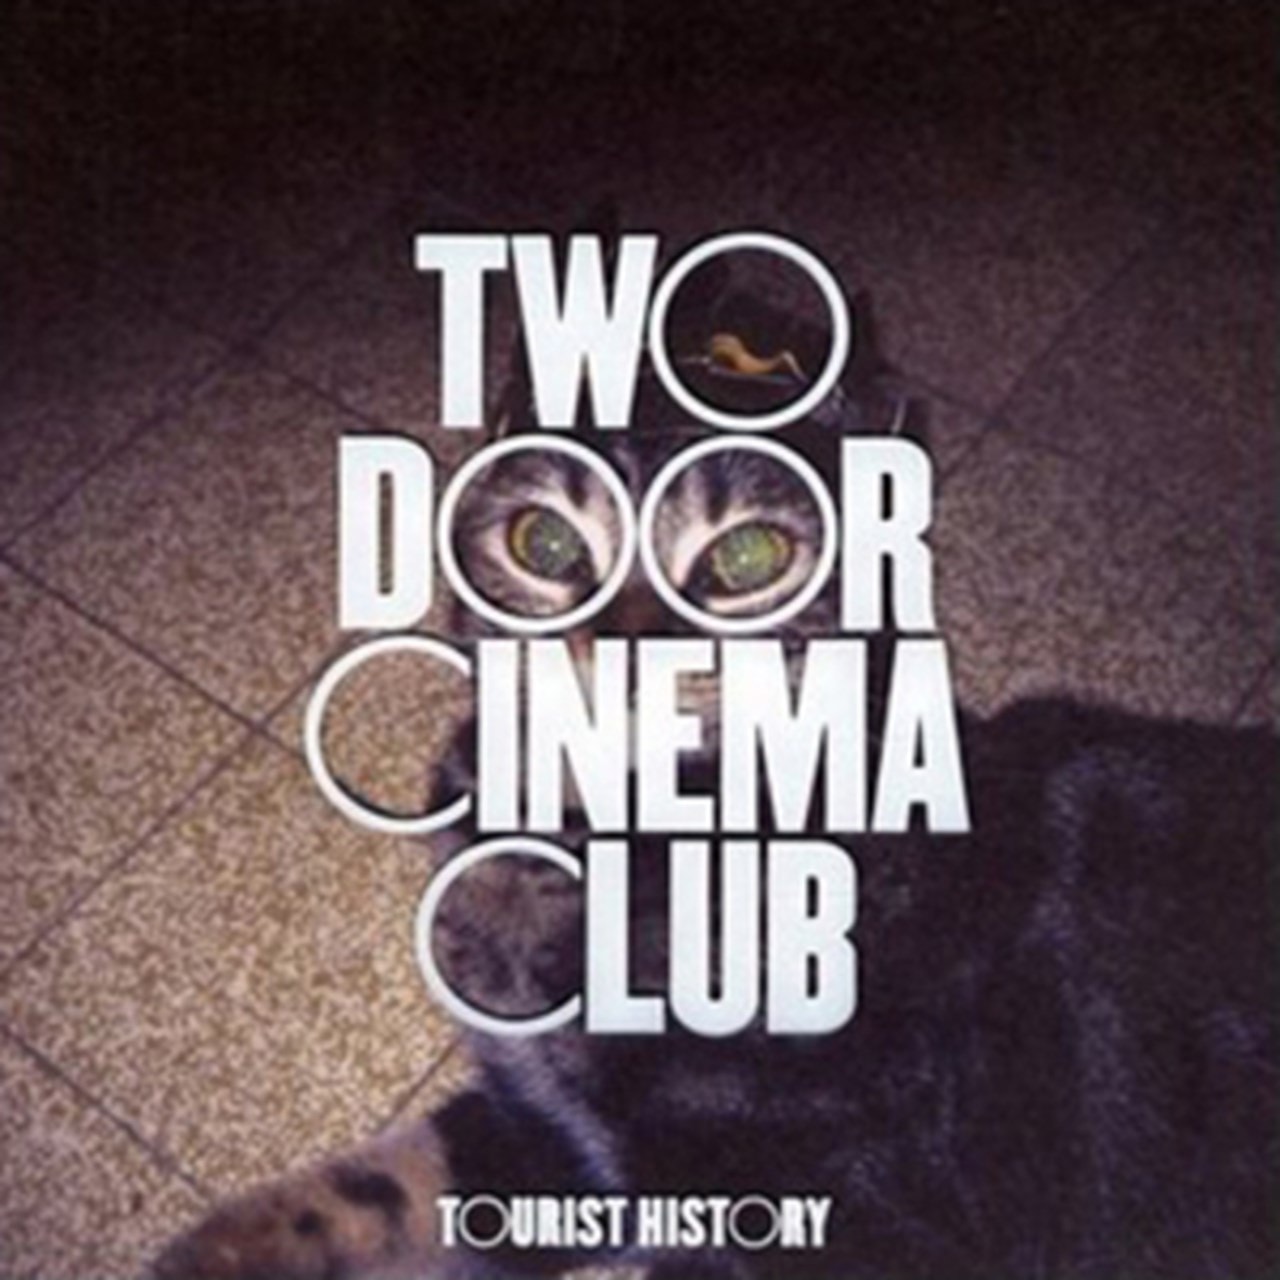 2 door cinema club tourist history